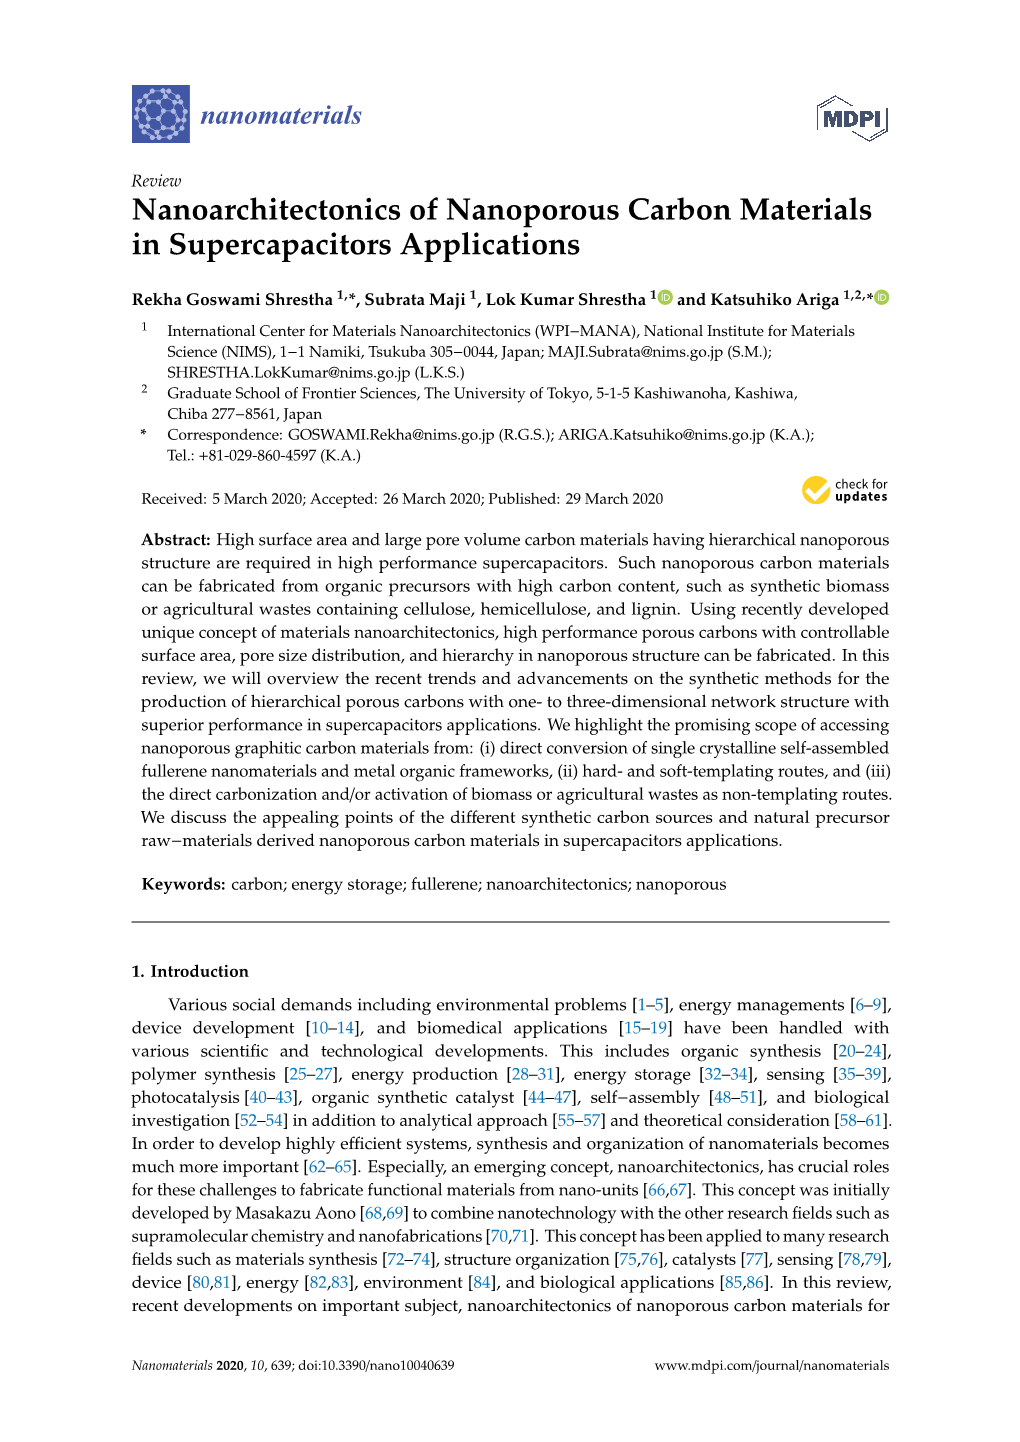 Nanoarchitectonics of Nanoporous Carbon Materials in Supercapacitors Applications